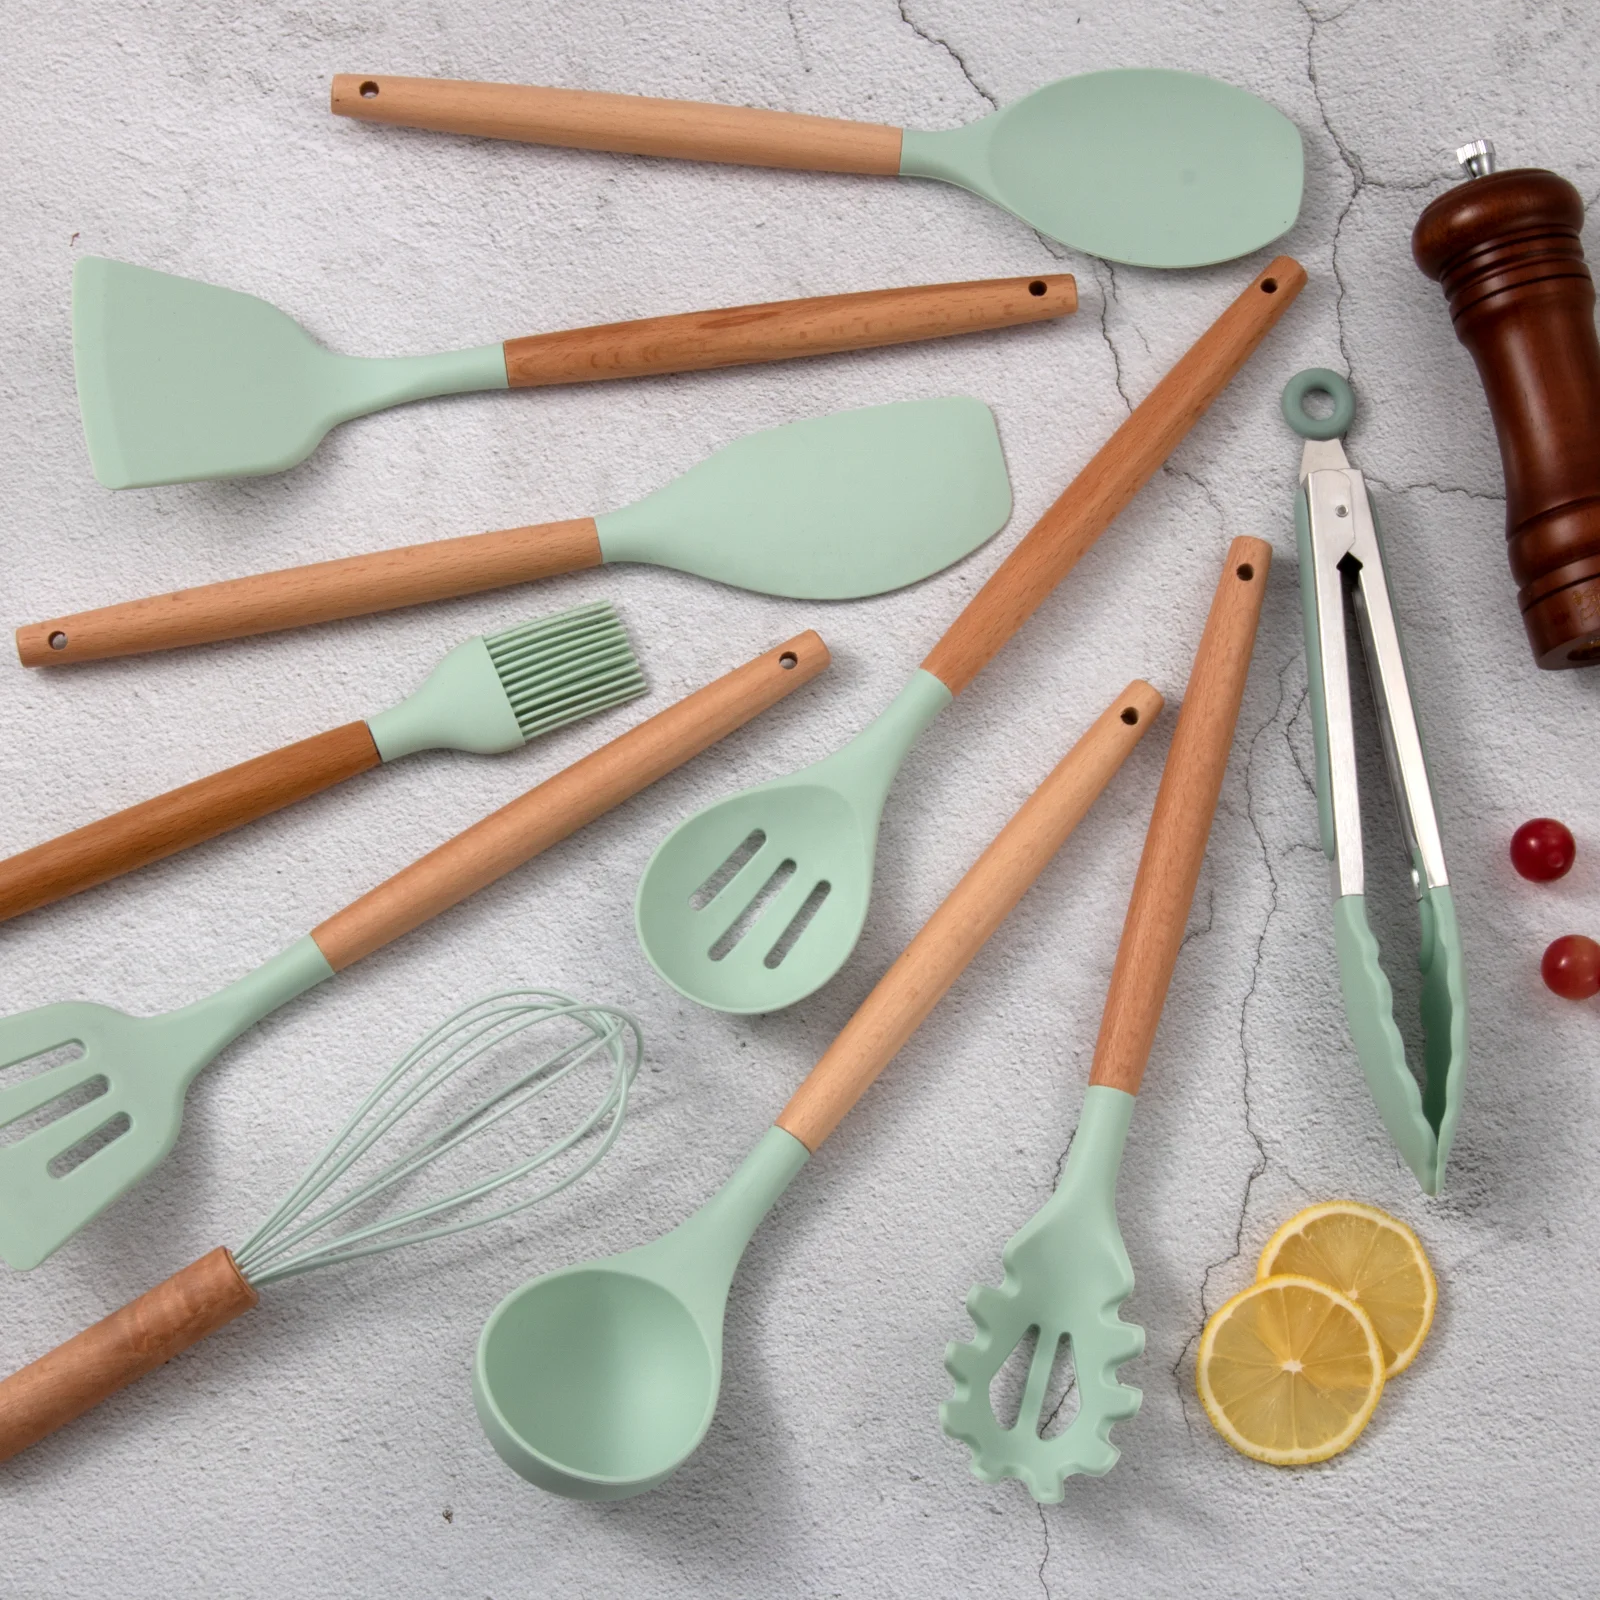 Wholesale 12 Pcs set silicone kitchenware accessories cooking tools set spatula stirring kitchen utensils Wooden Handle